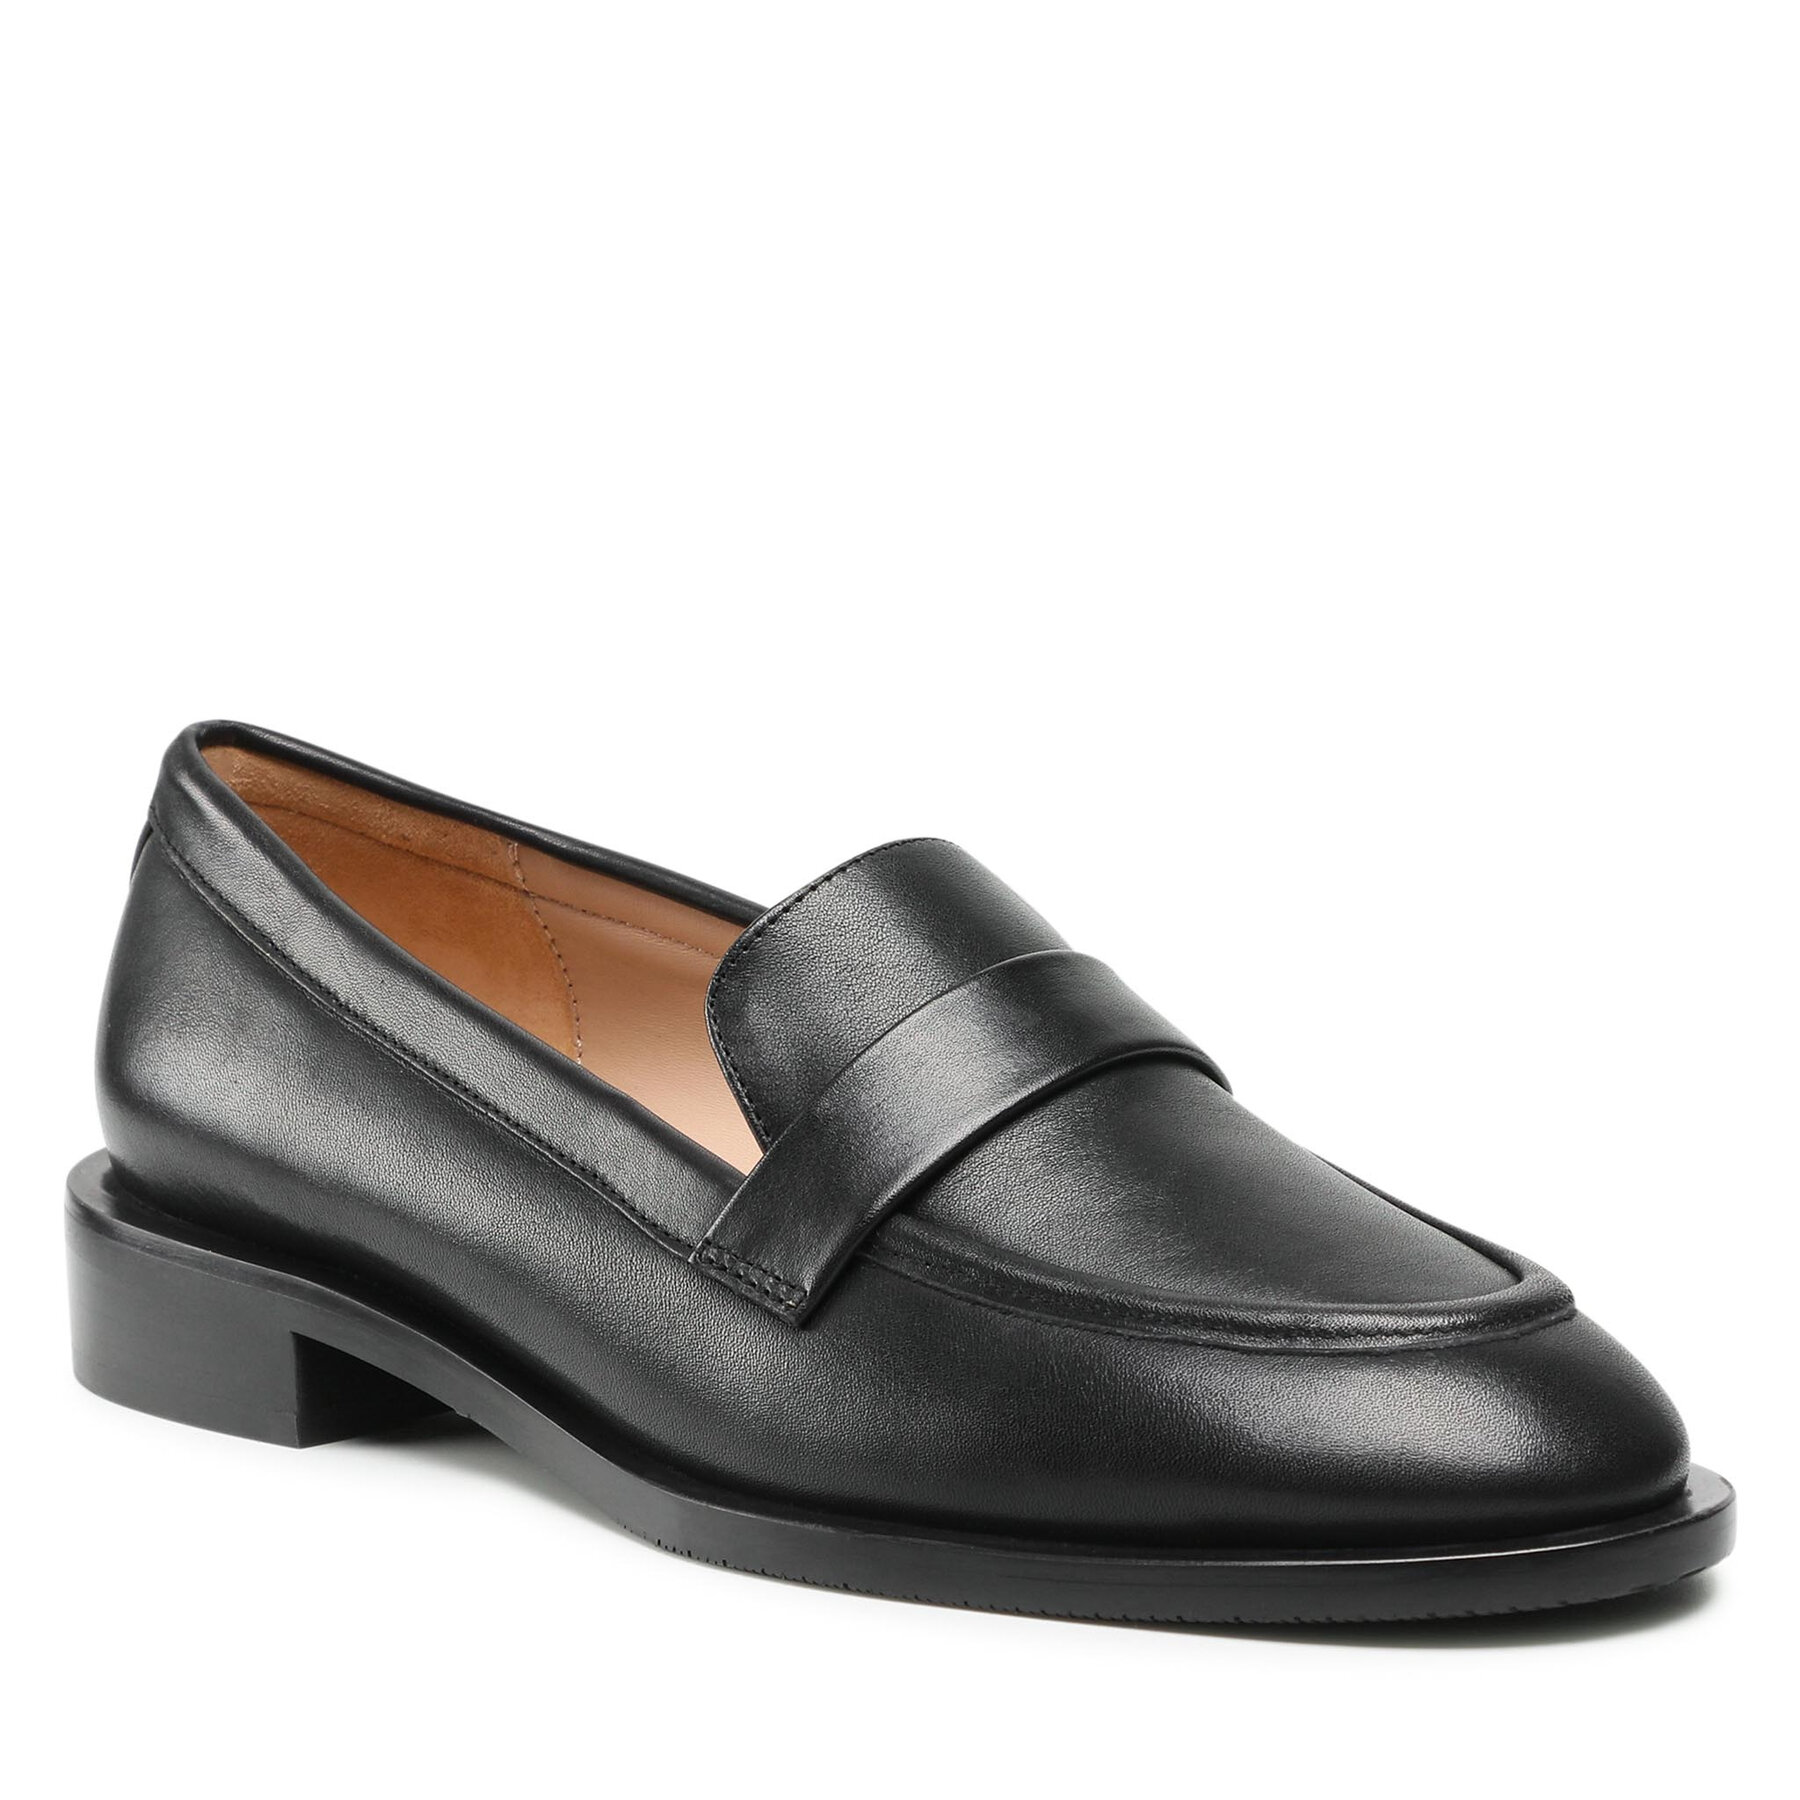 Lords Stuart Weitzman Palmer Sleek Loafer S5987 Black